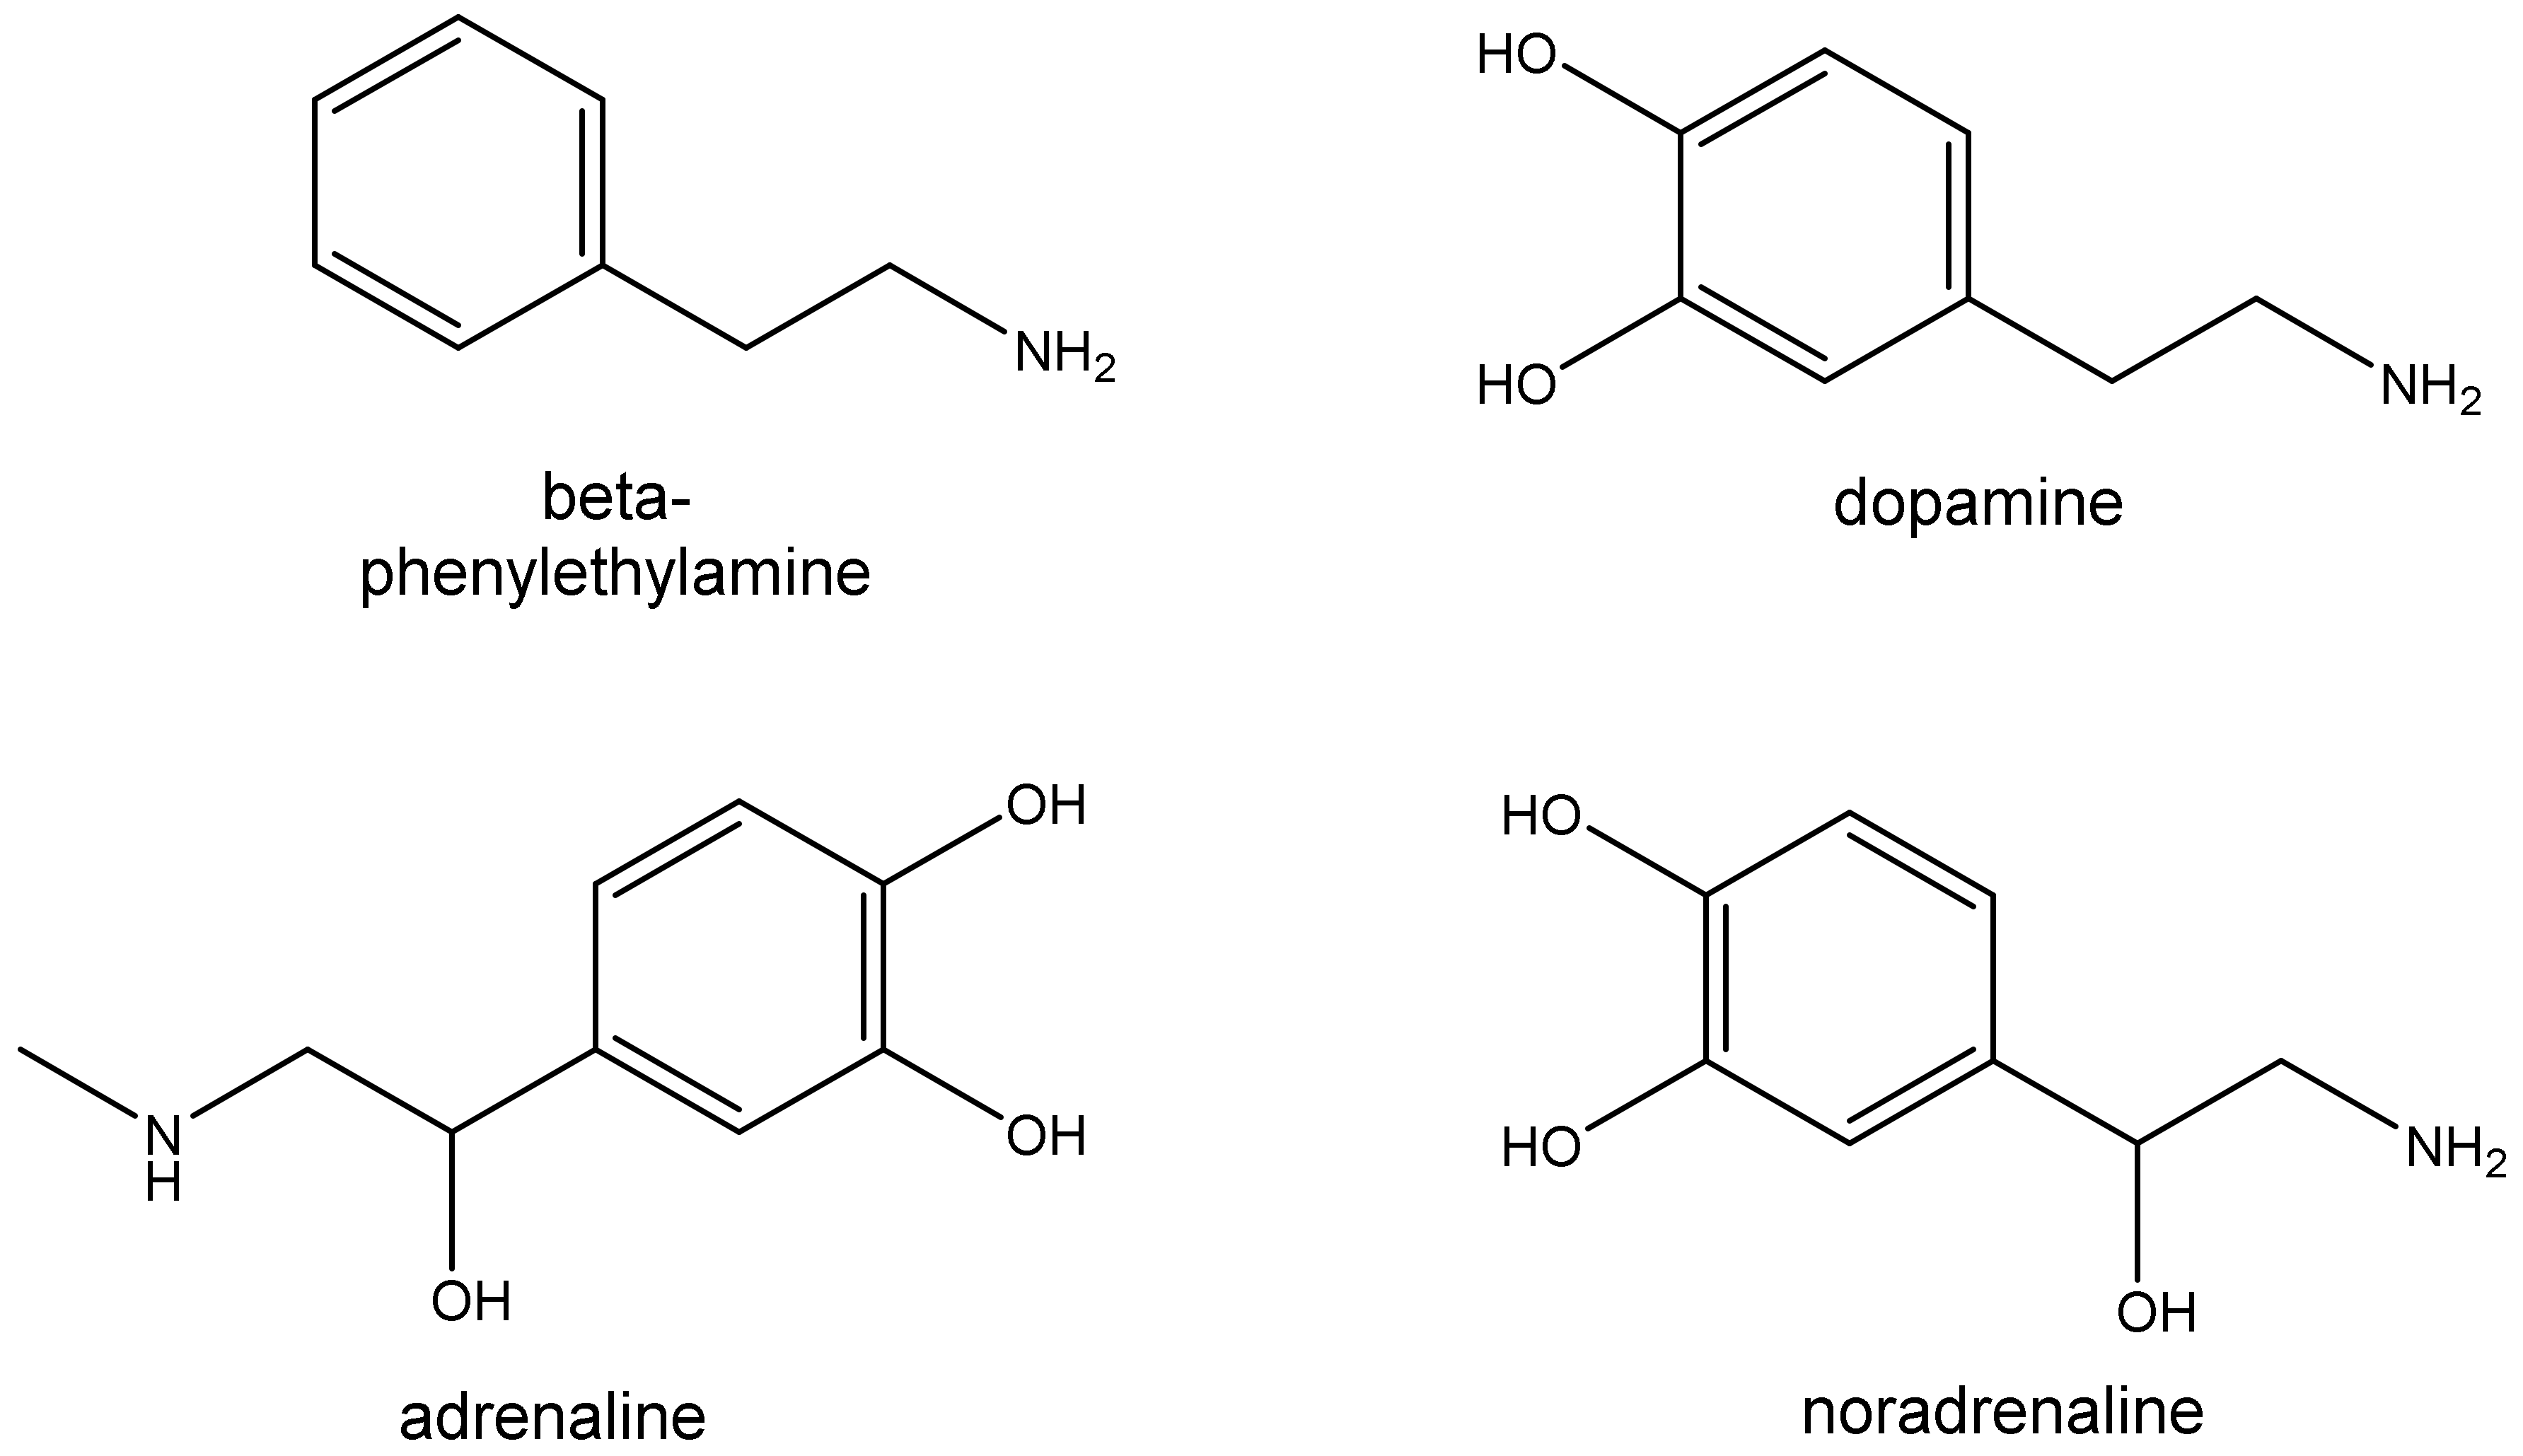 https://pub.mdpi-res.com/biomolecules/biomolecules-12-01793/article_deploy/html/images/biomolecules-12-01793-g001.png?1669968880